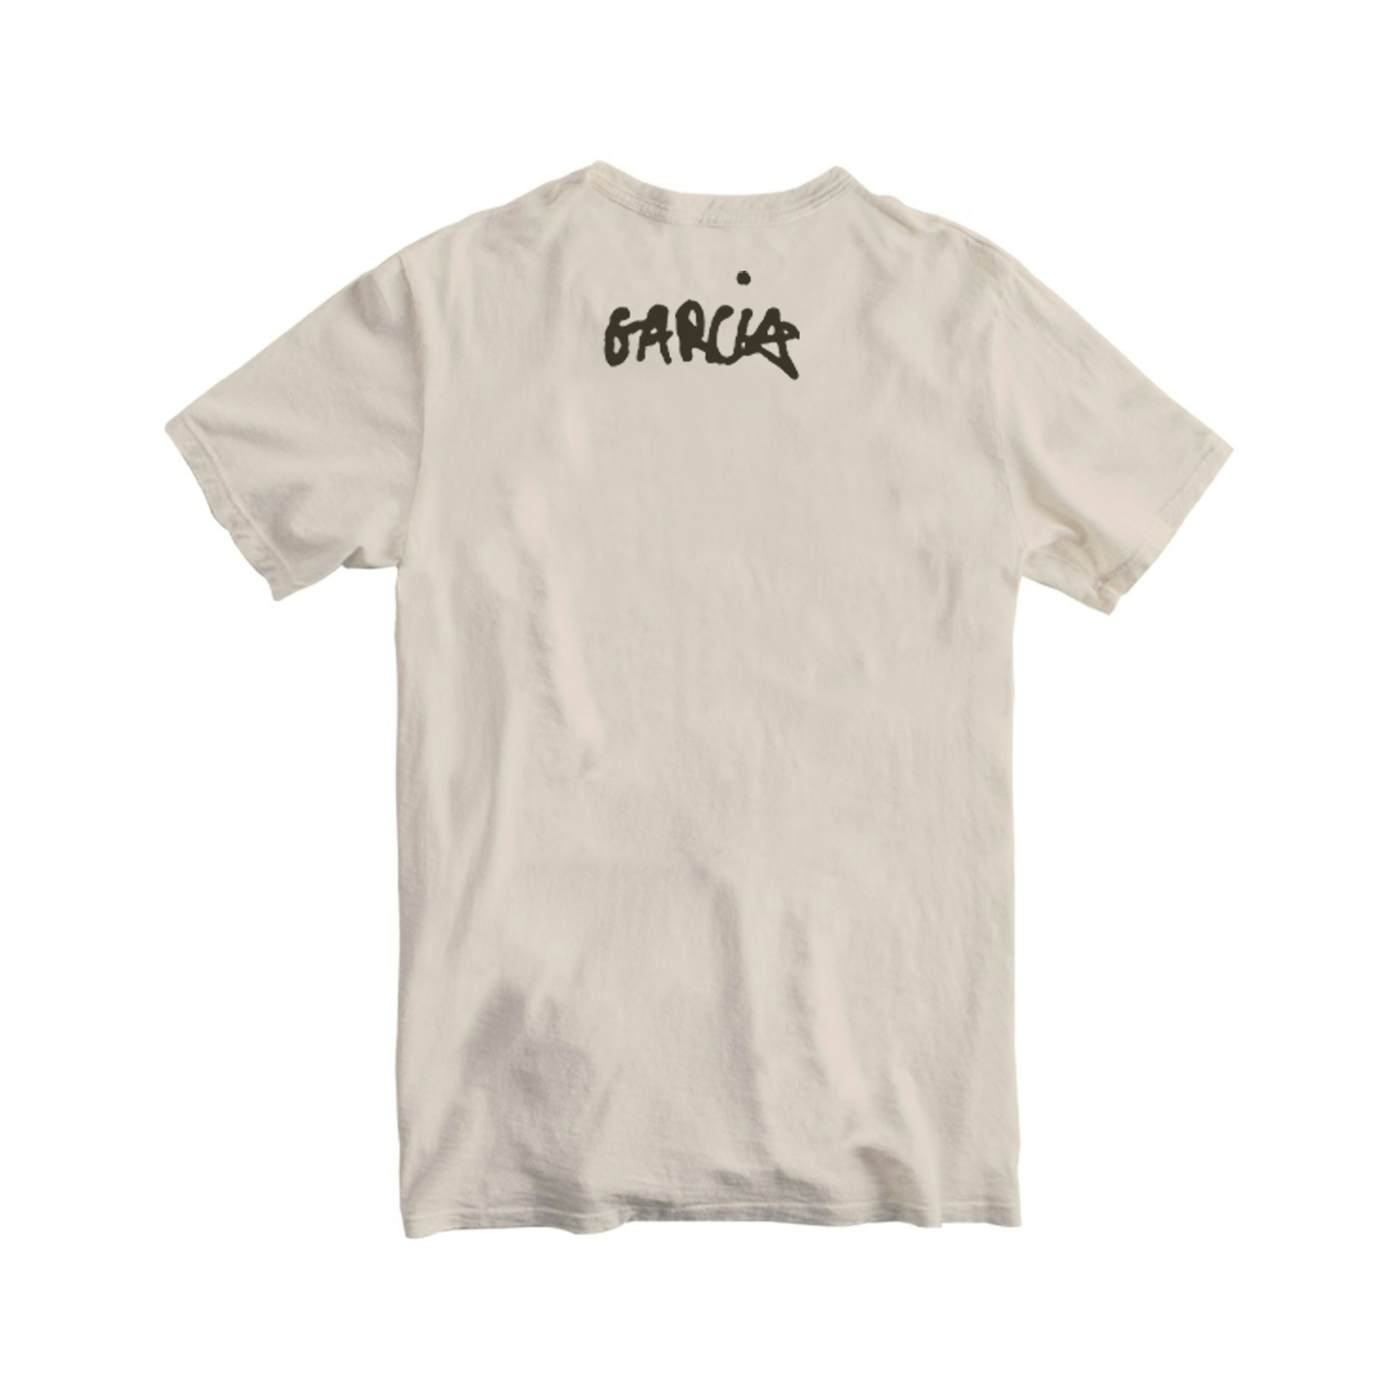 Heads & Vol. T-Shirt 1 Organic Jerry Tails: Garcia